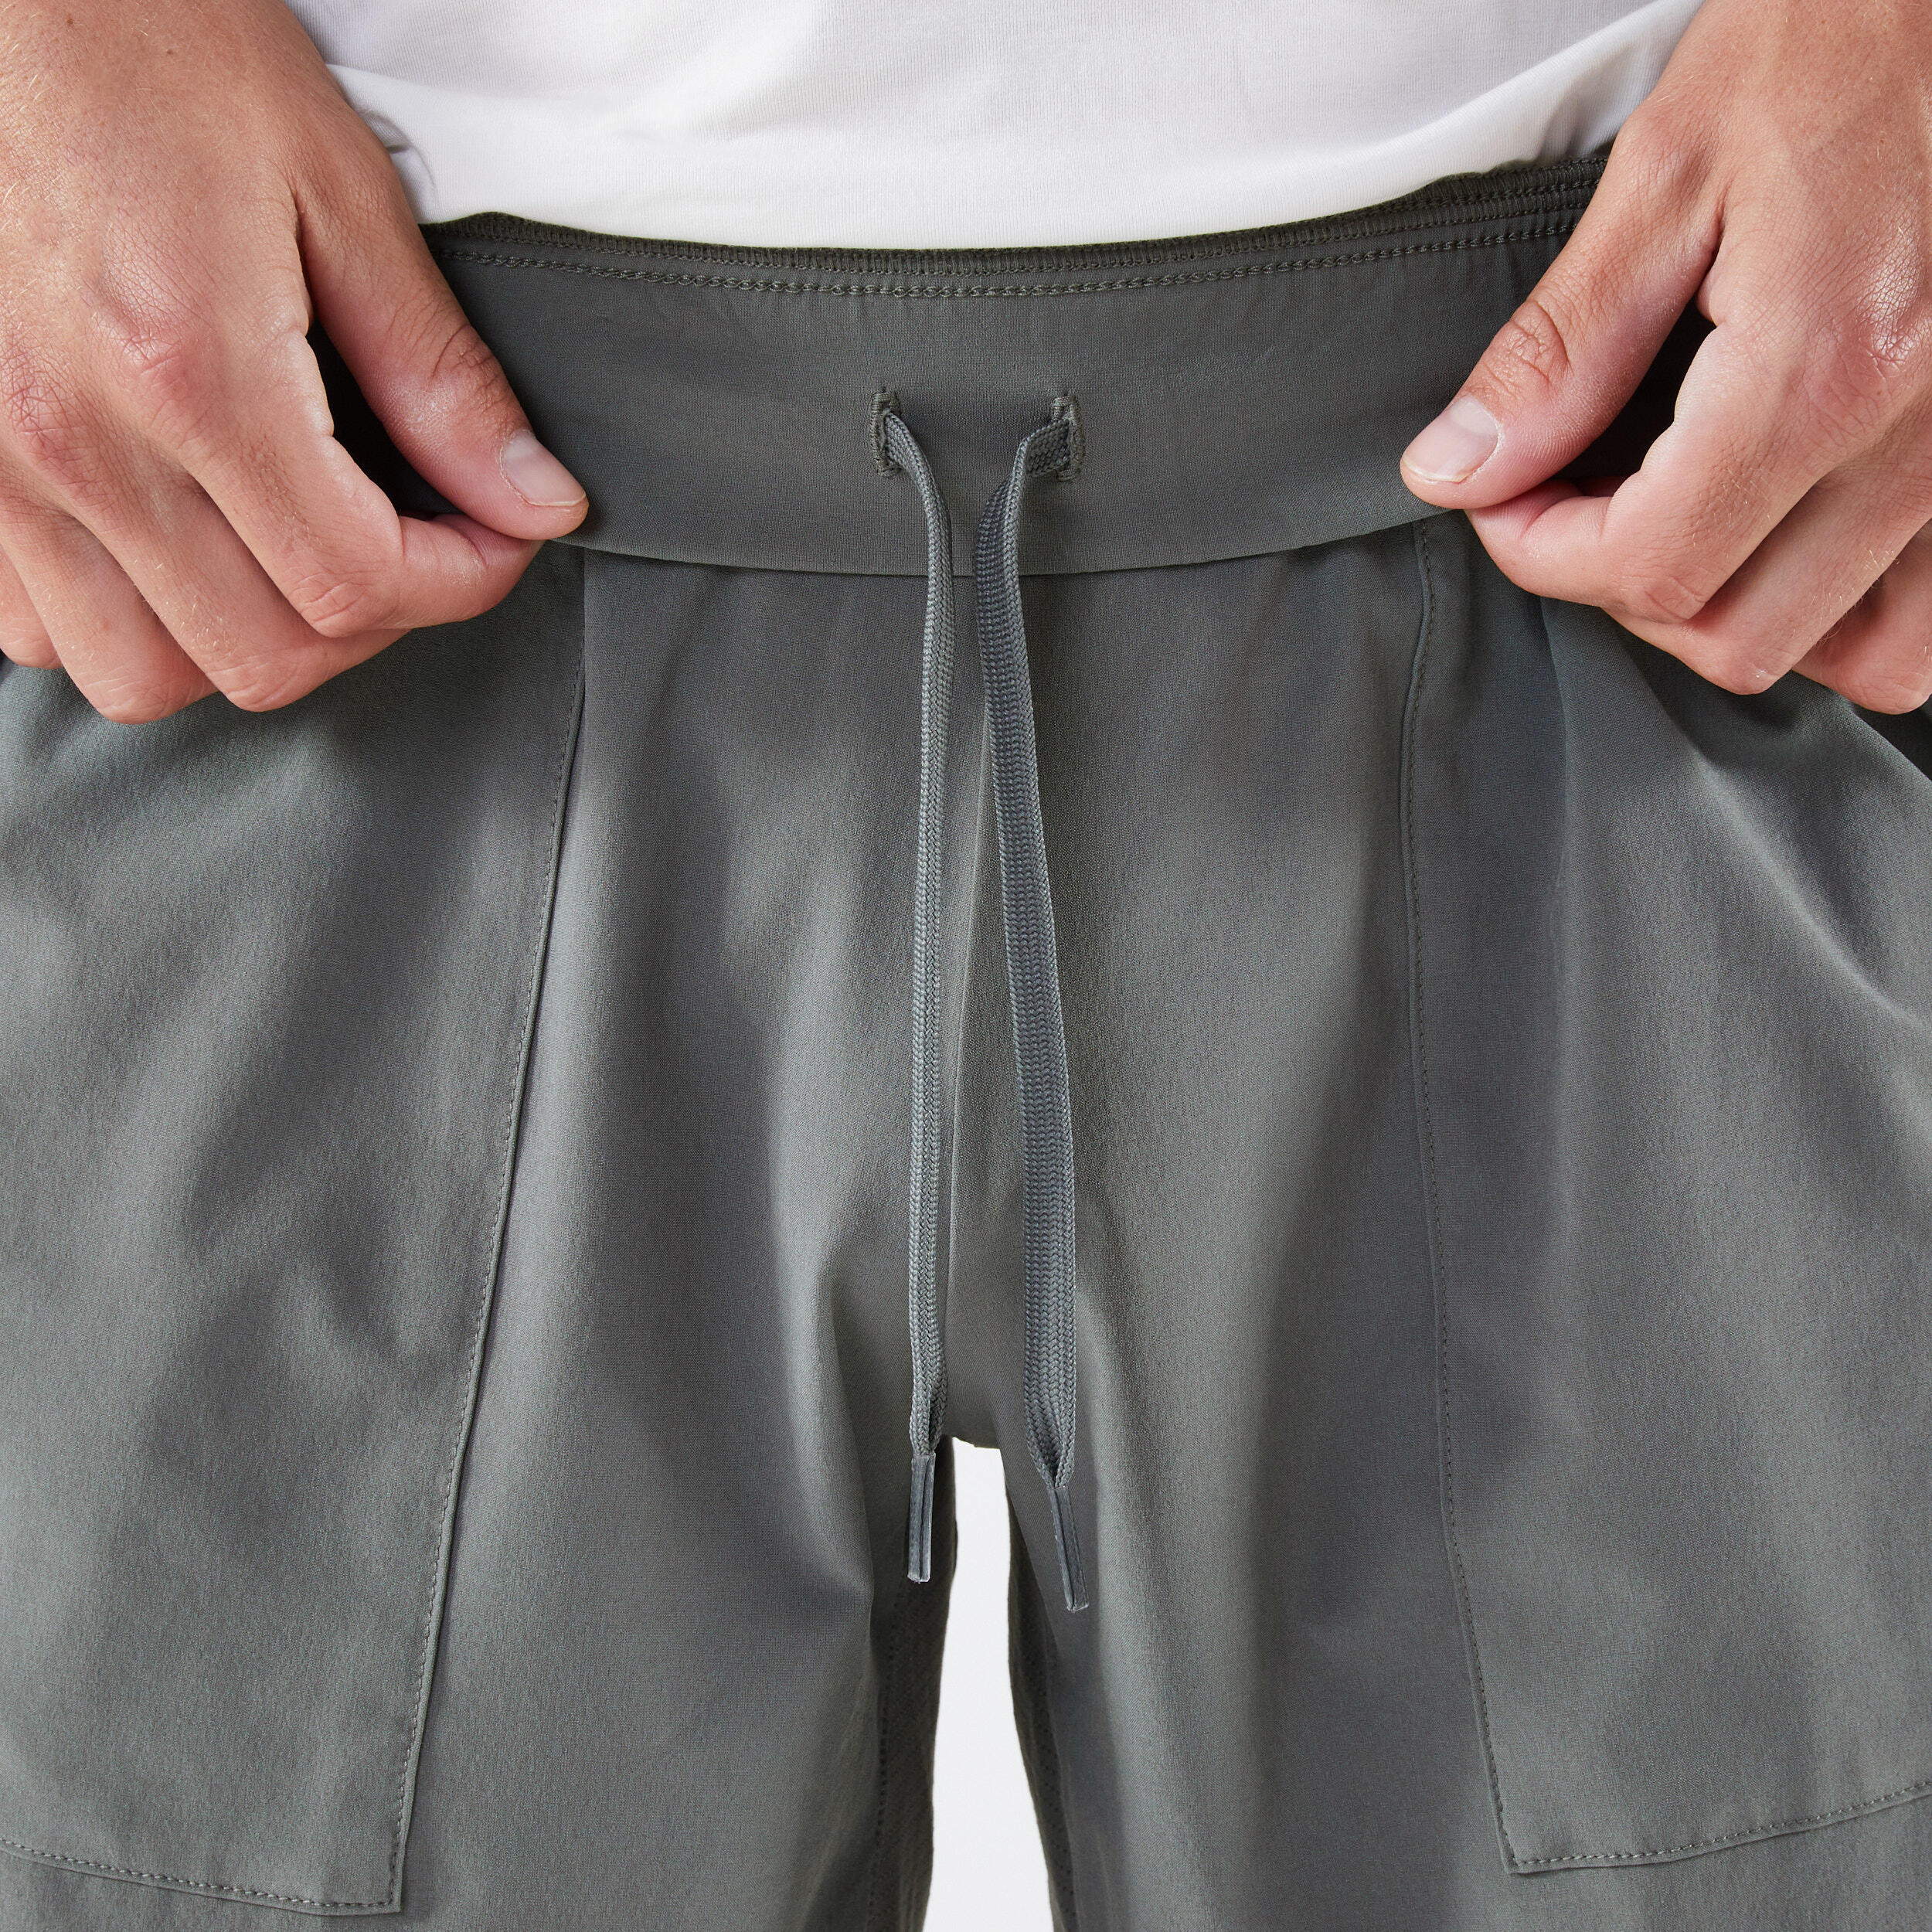 Men's Breathable Tennis Shorts Dry - Khaki 4/6